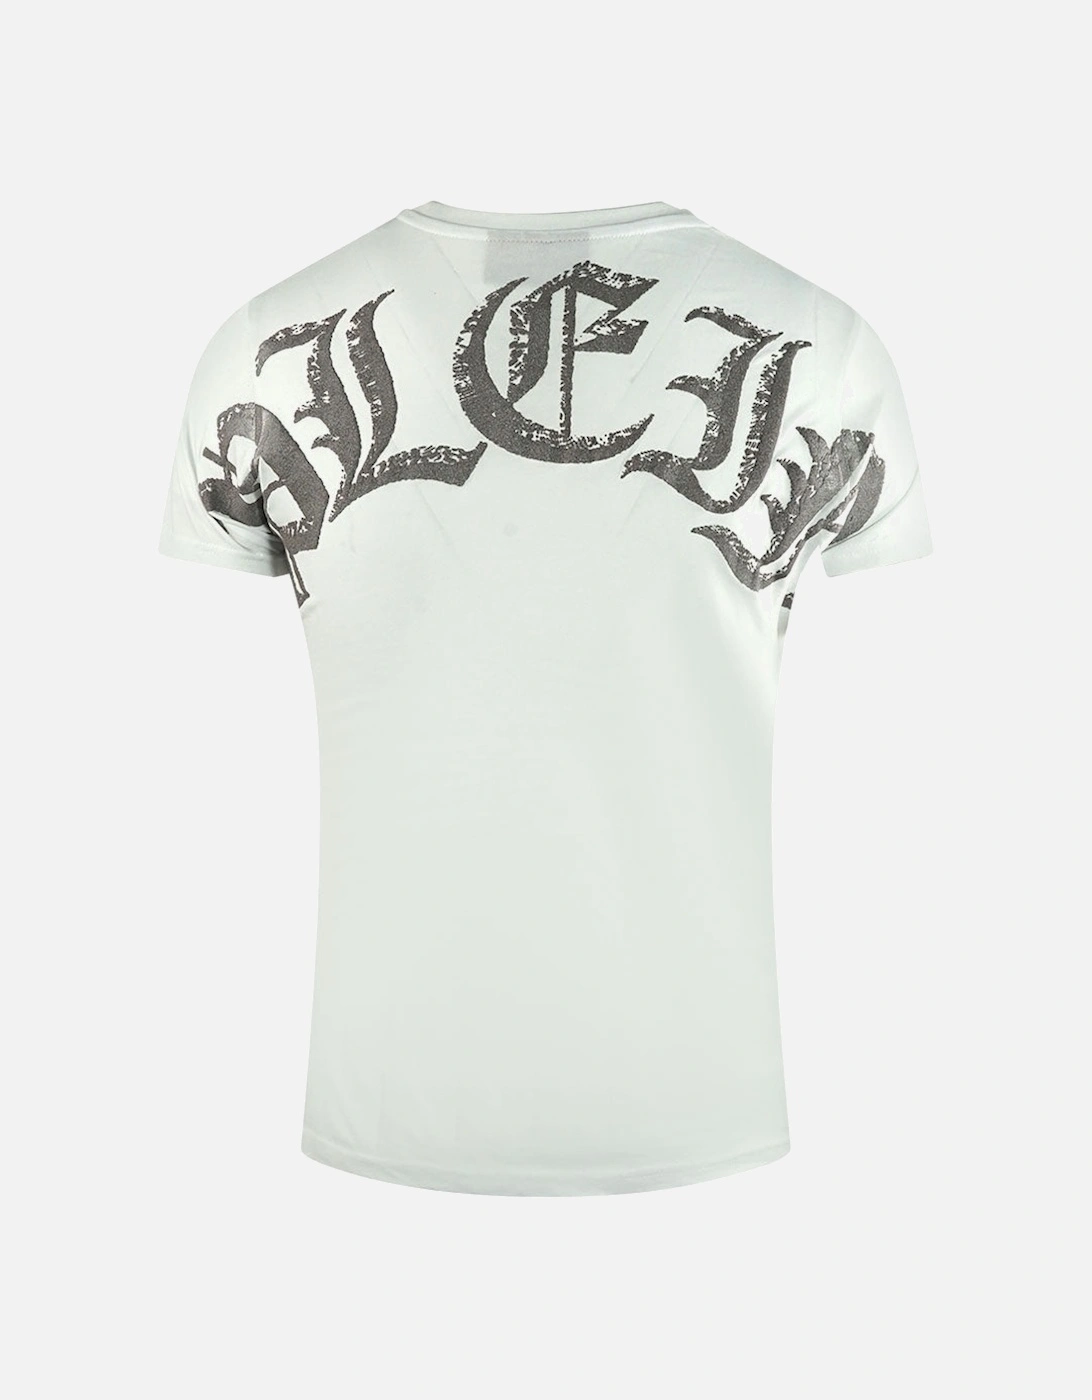 Lincon Large Skull Crystal Design White T-Shirt